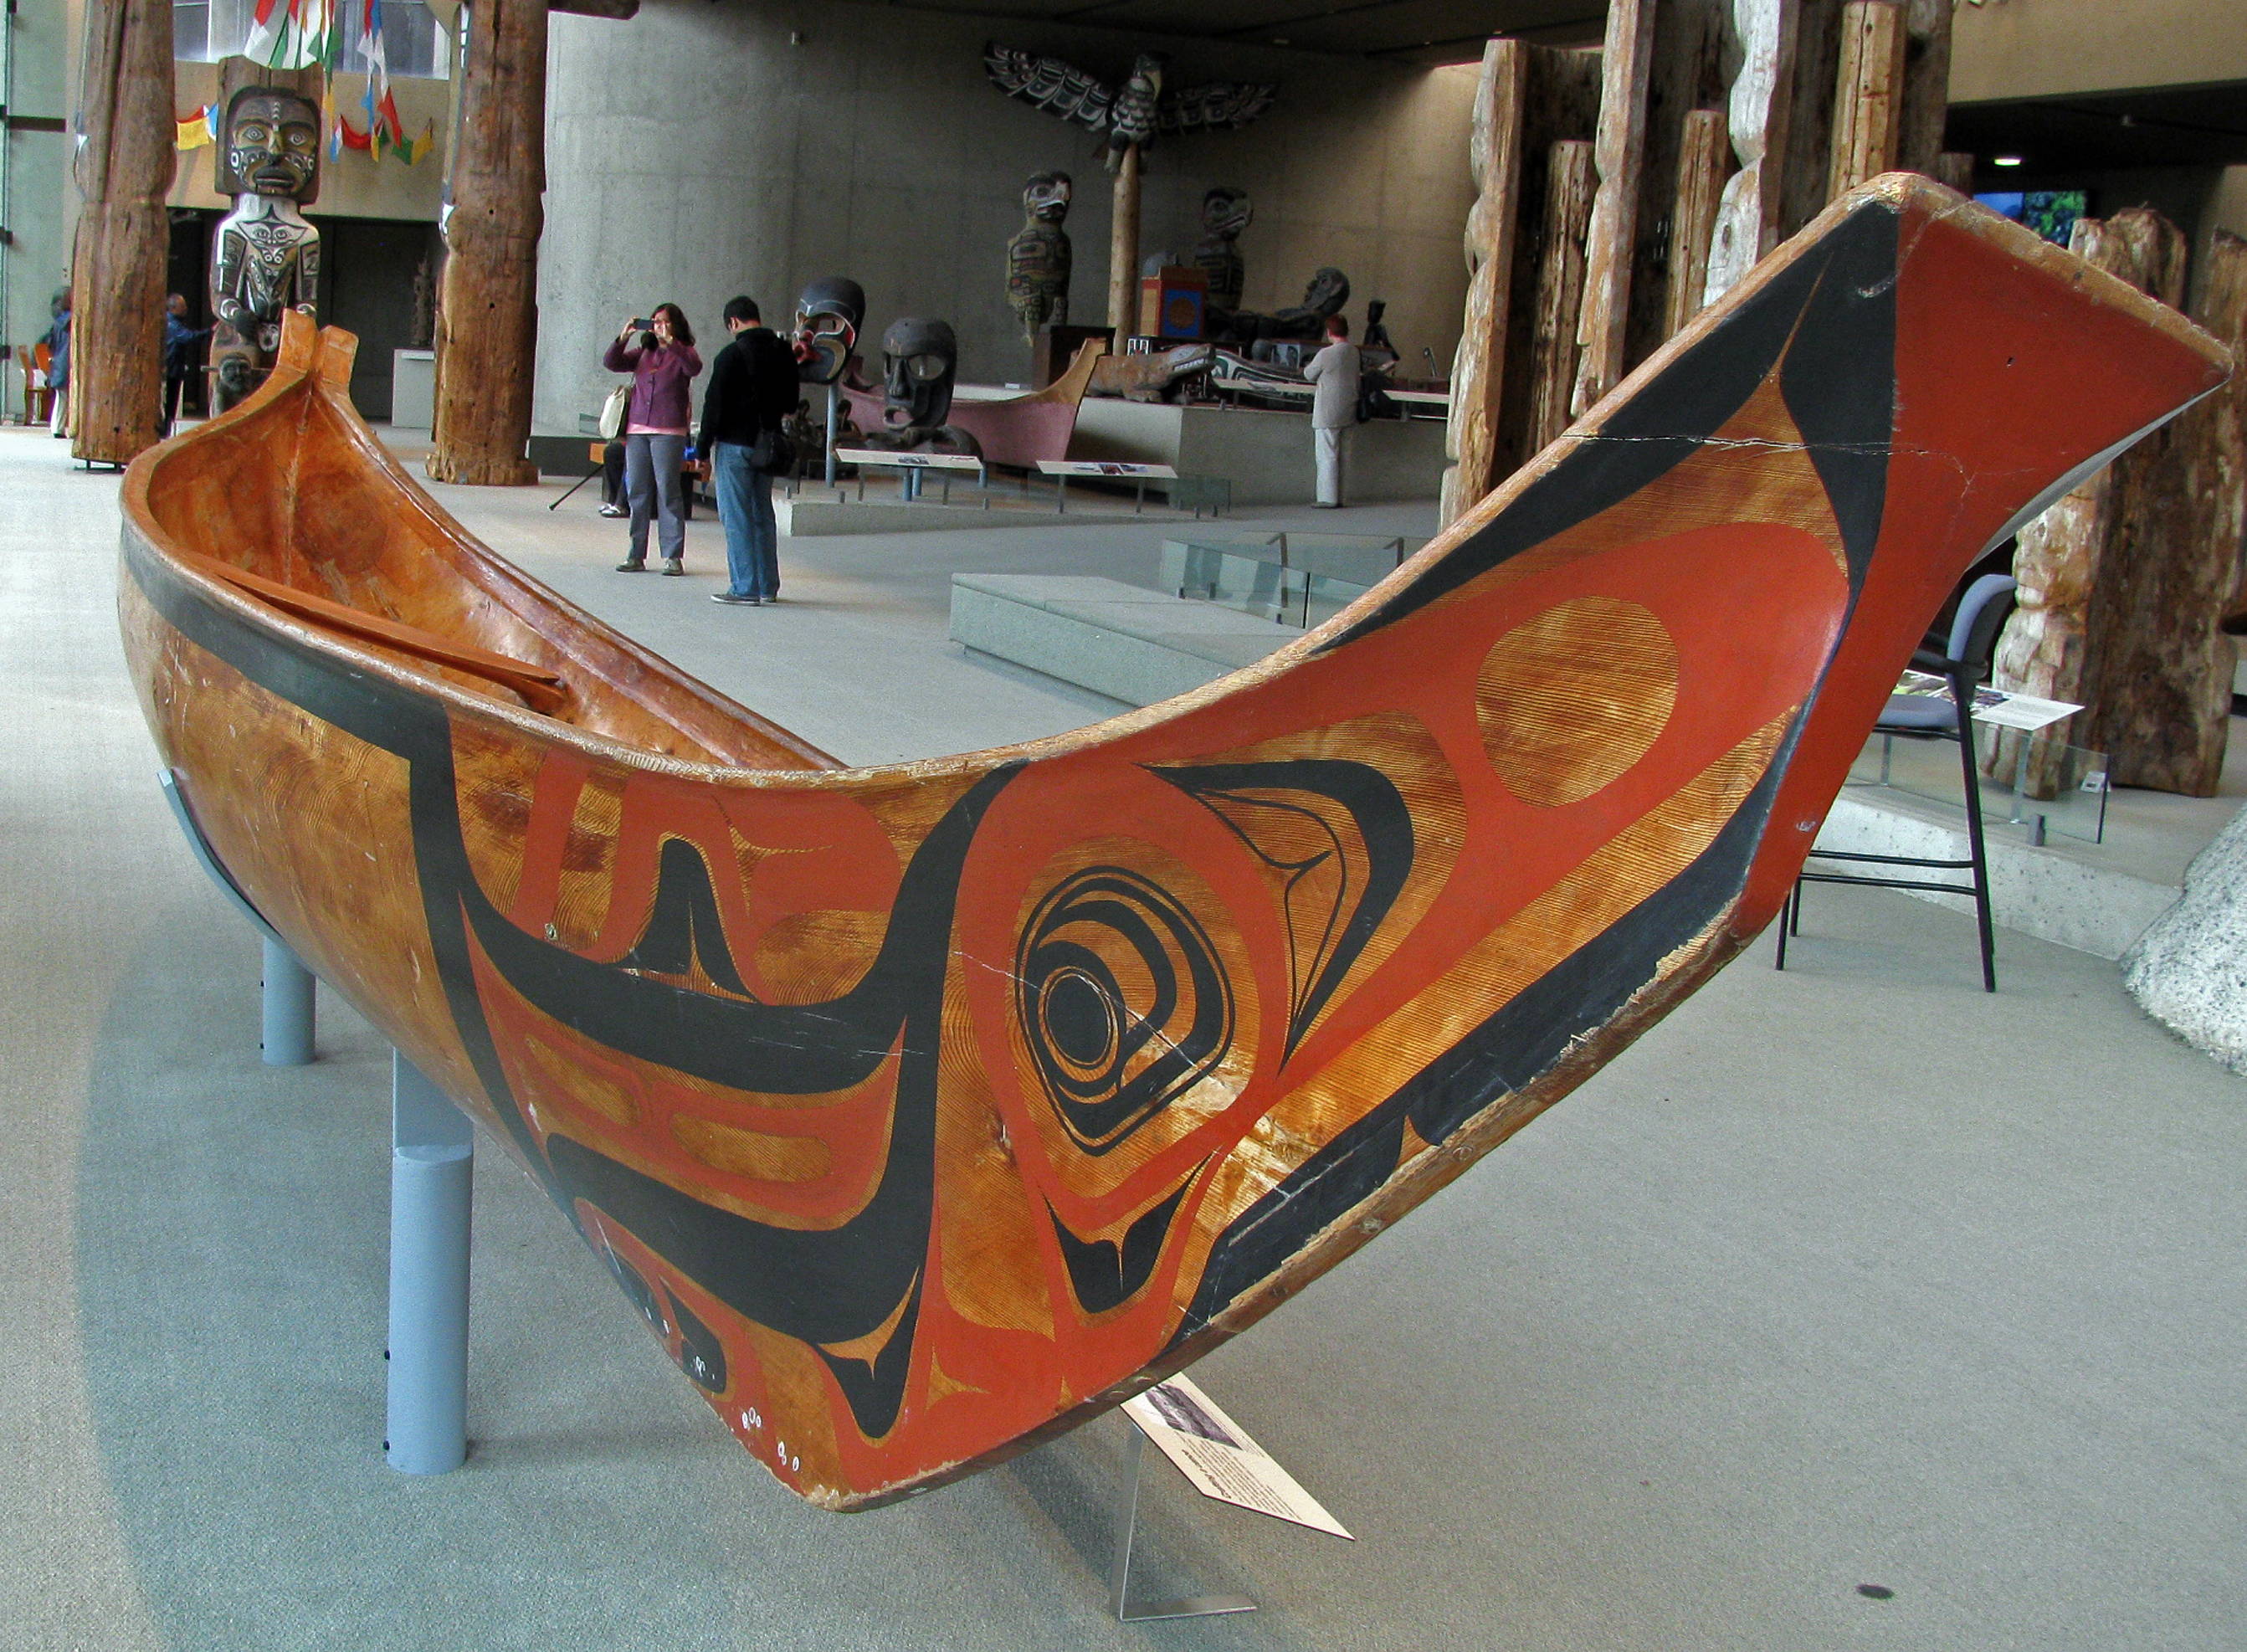 Full size northern style Tluu dugout canoe